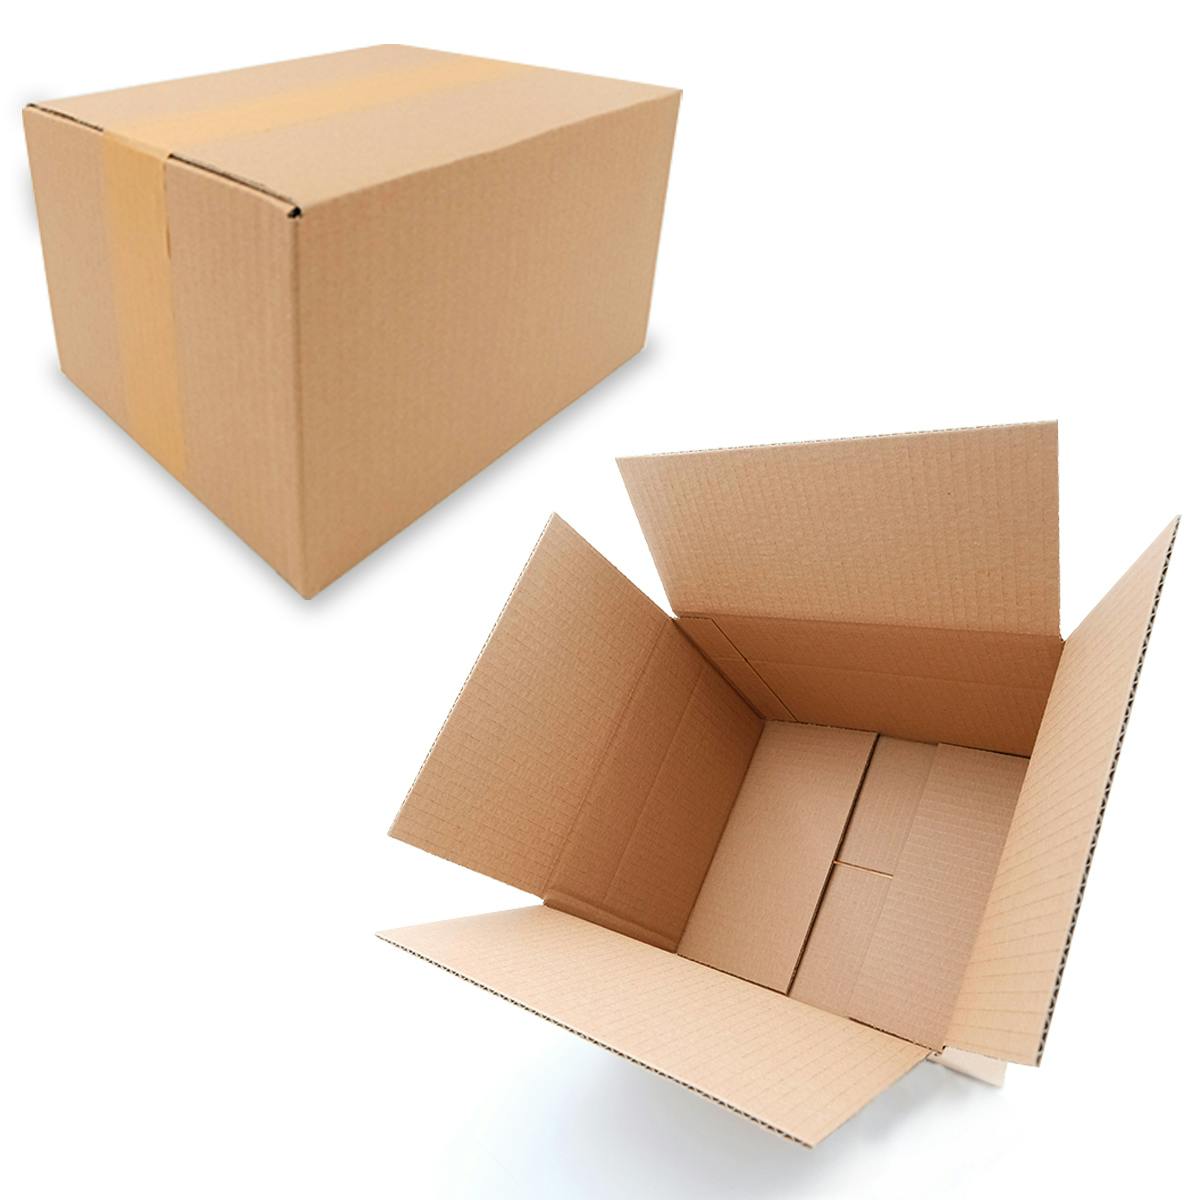 Karton Faltkartons in weiss Faltkartons 250x200x140 mm weiß Menge wählbar Versandkartons DHL Pakete für Versand 25-1000 Stück 100 